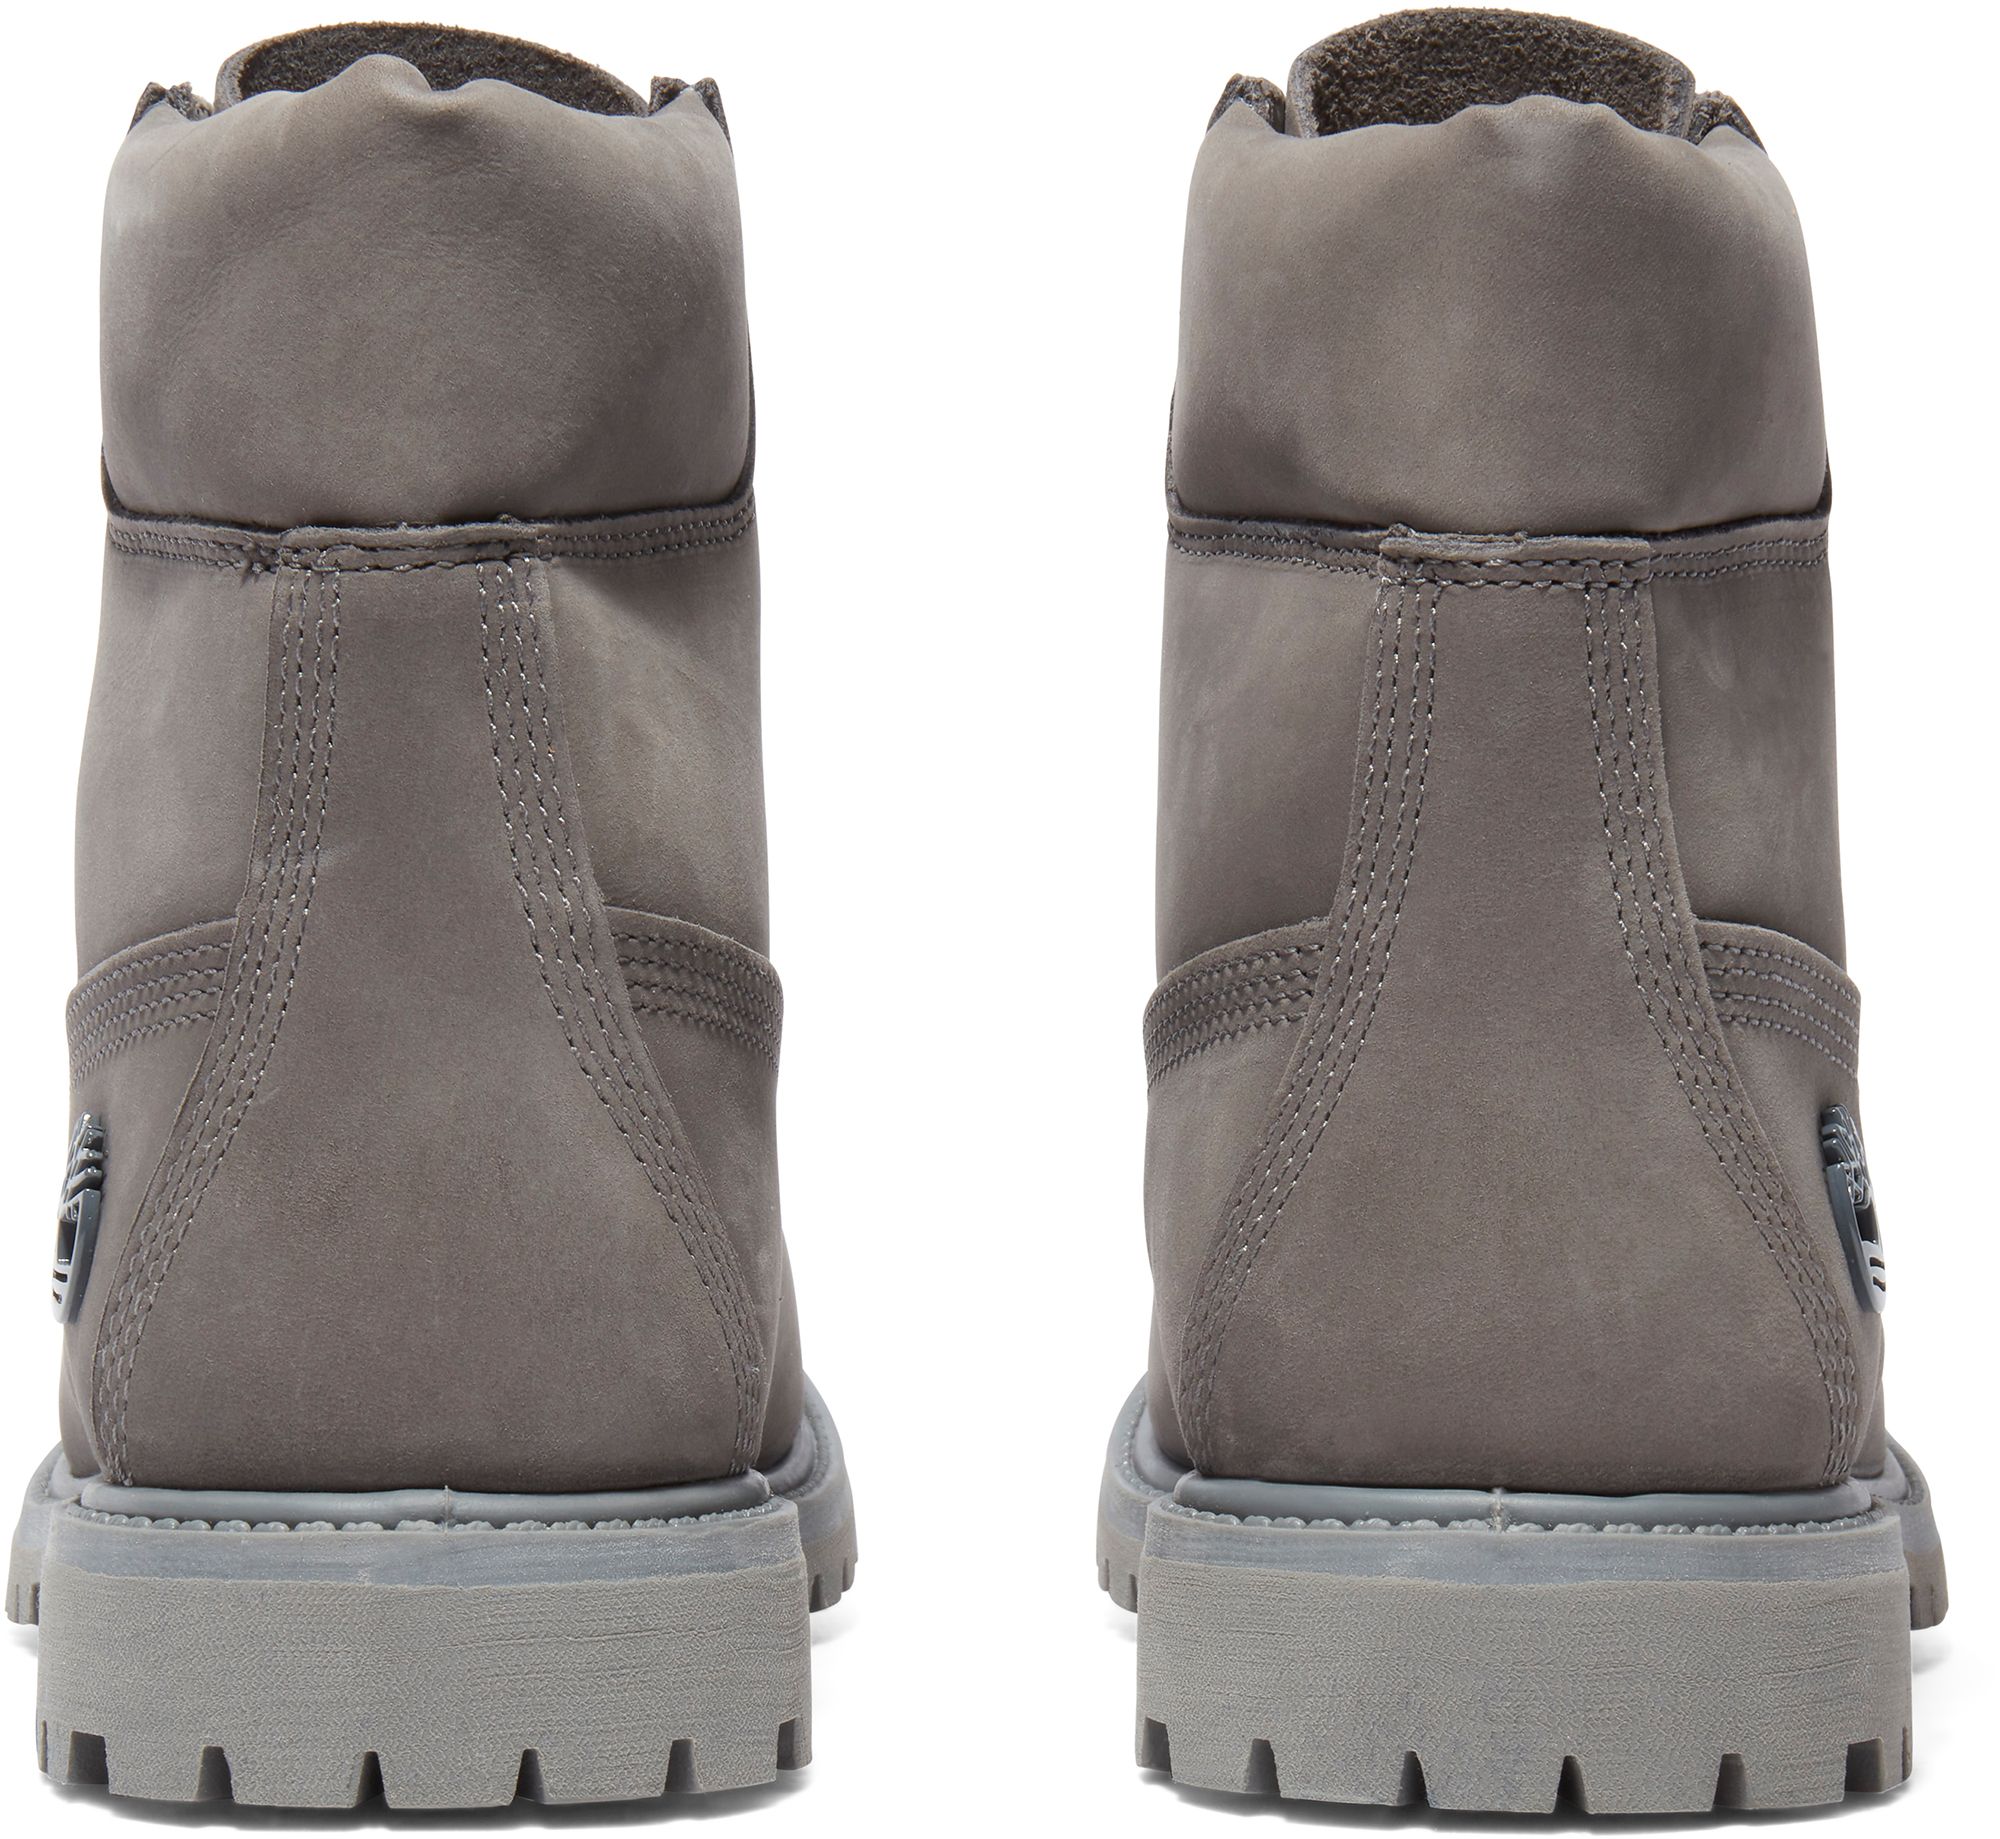 Timberland Women's Premium 6” Waterproof Boots